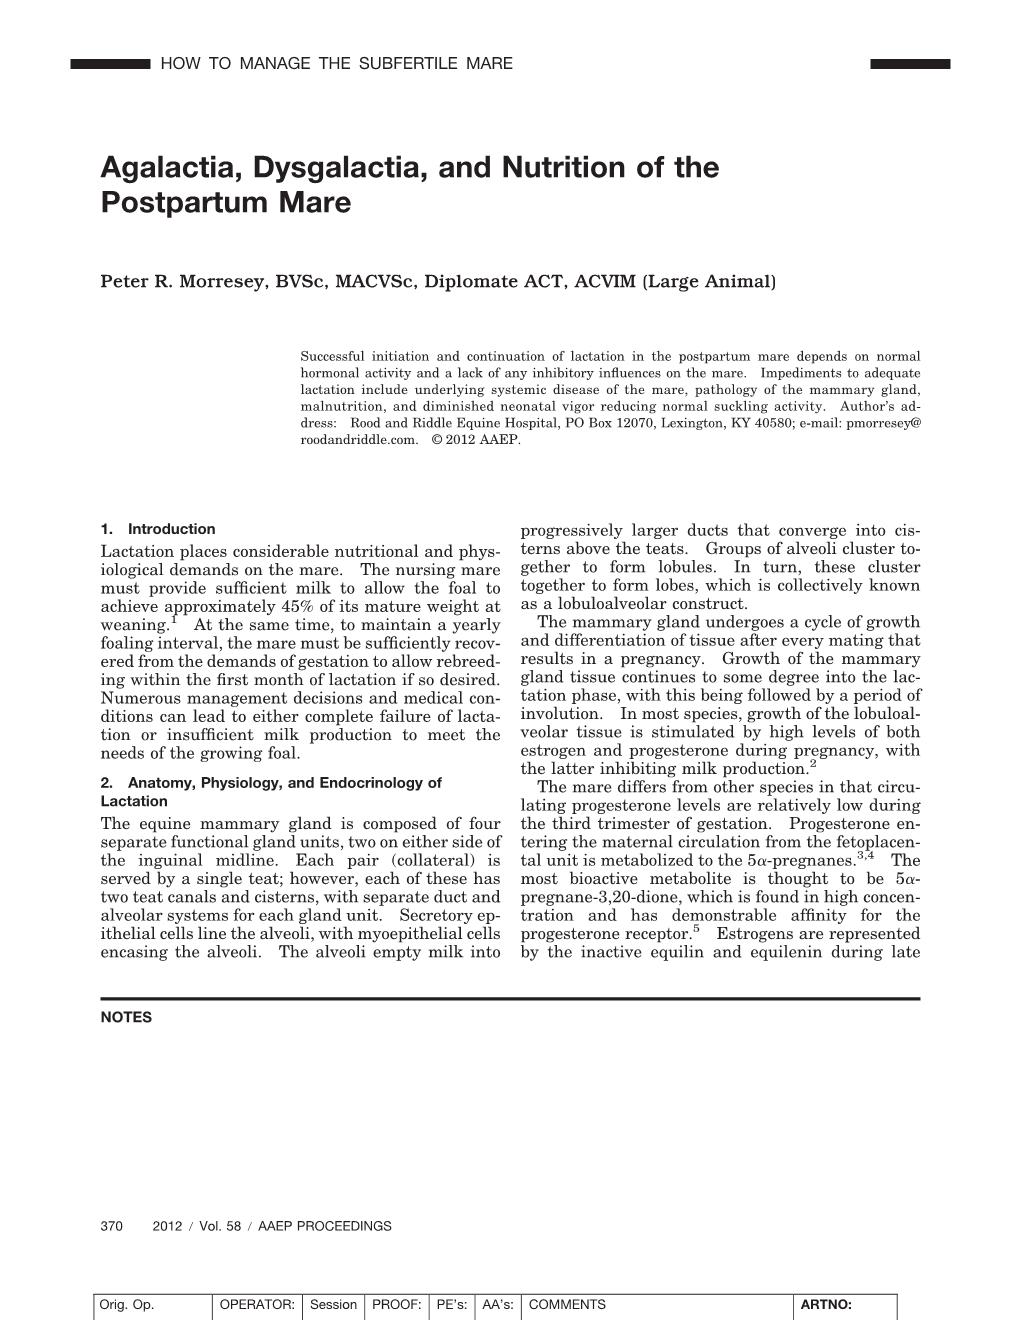 Agalactia, Dysgalactia, and Nutrition of the Postpartum Mare